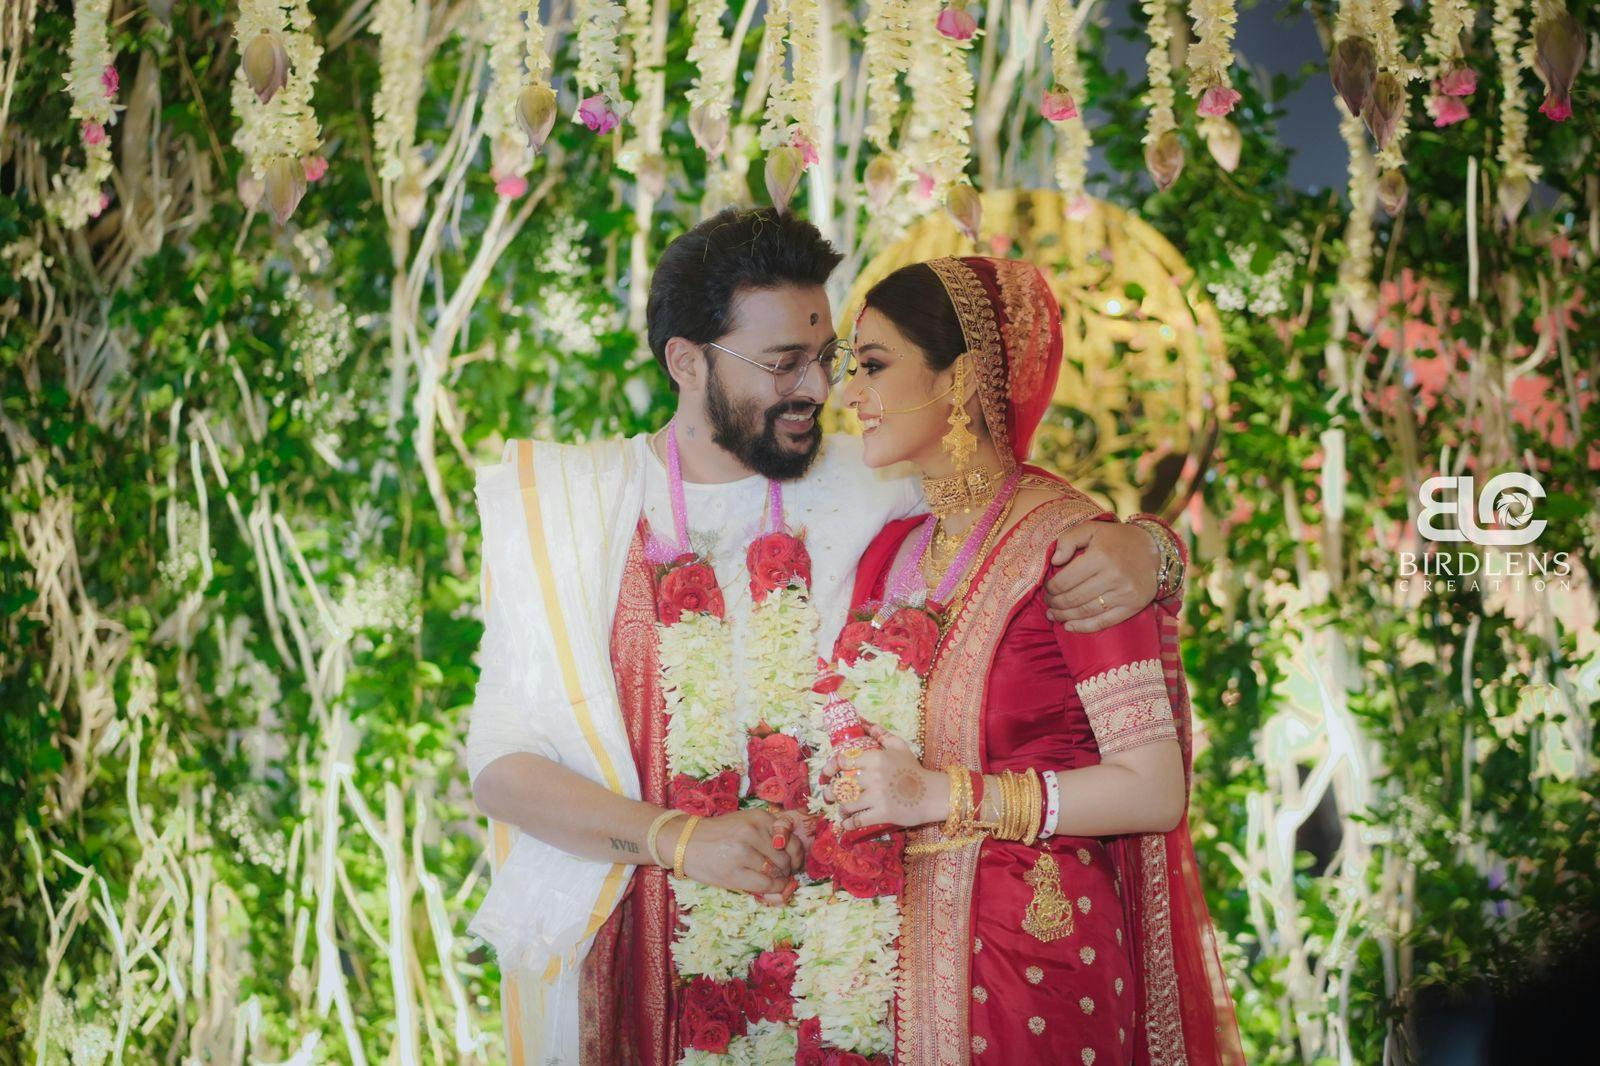 saurav das and darshana banik candid wedding photography image